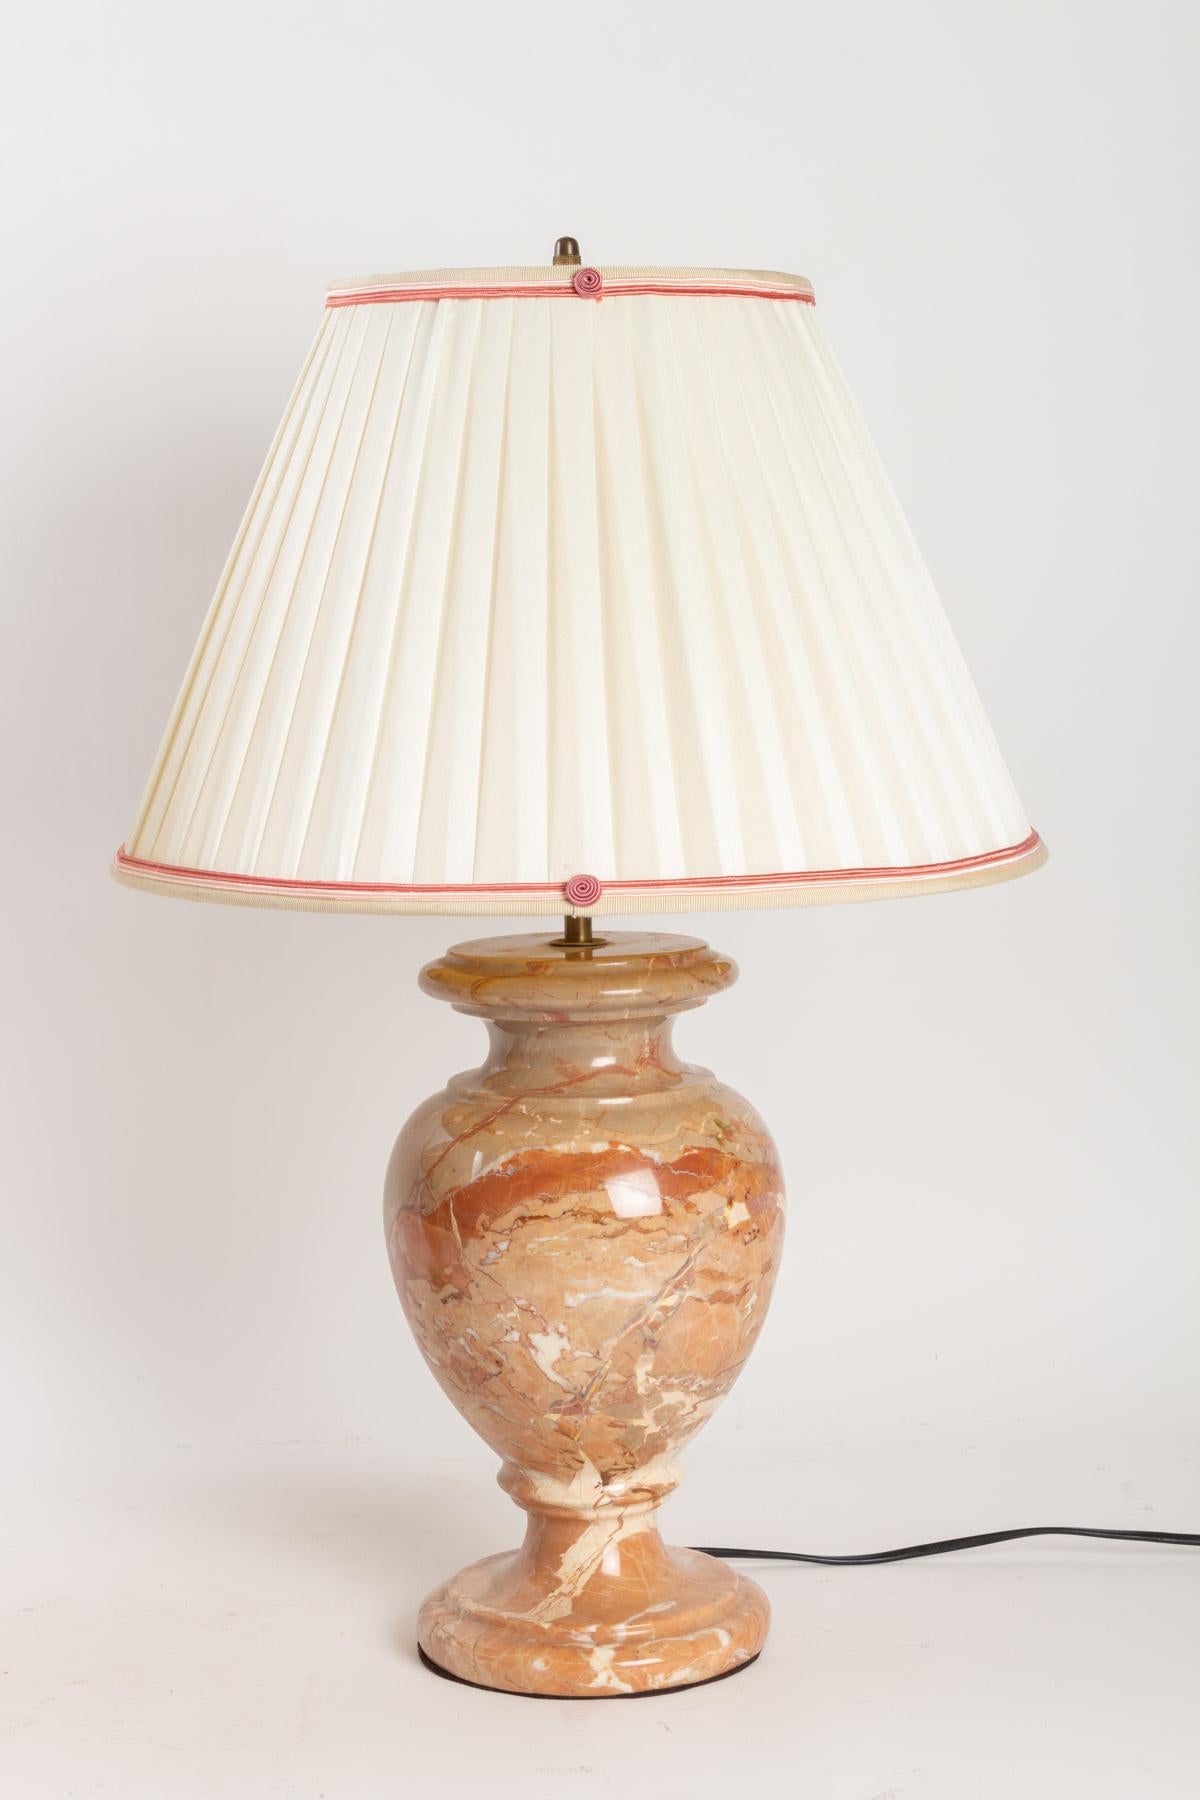 Pair of marble lamps, 20 century.
Measures: H 59 cm, D 40 cm.